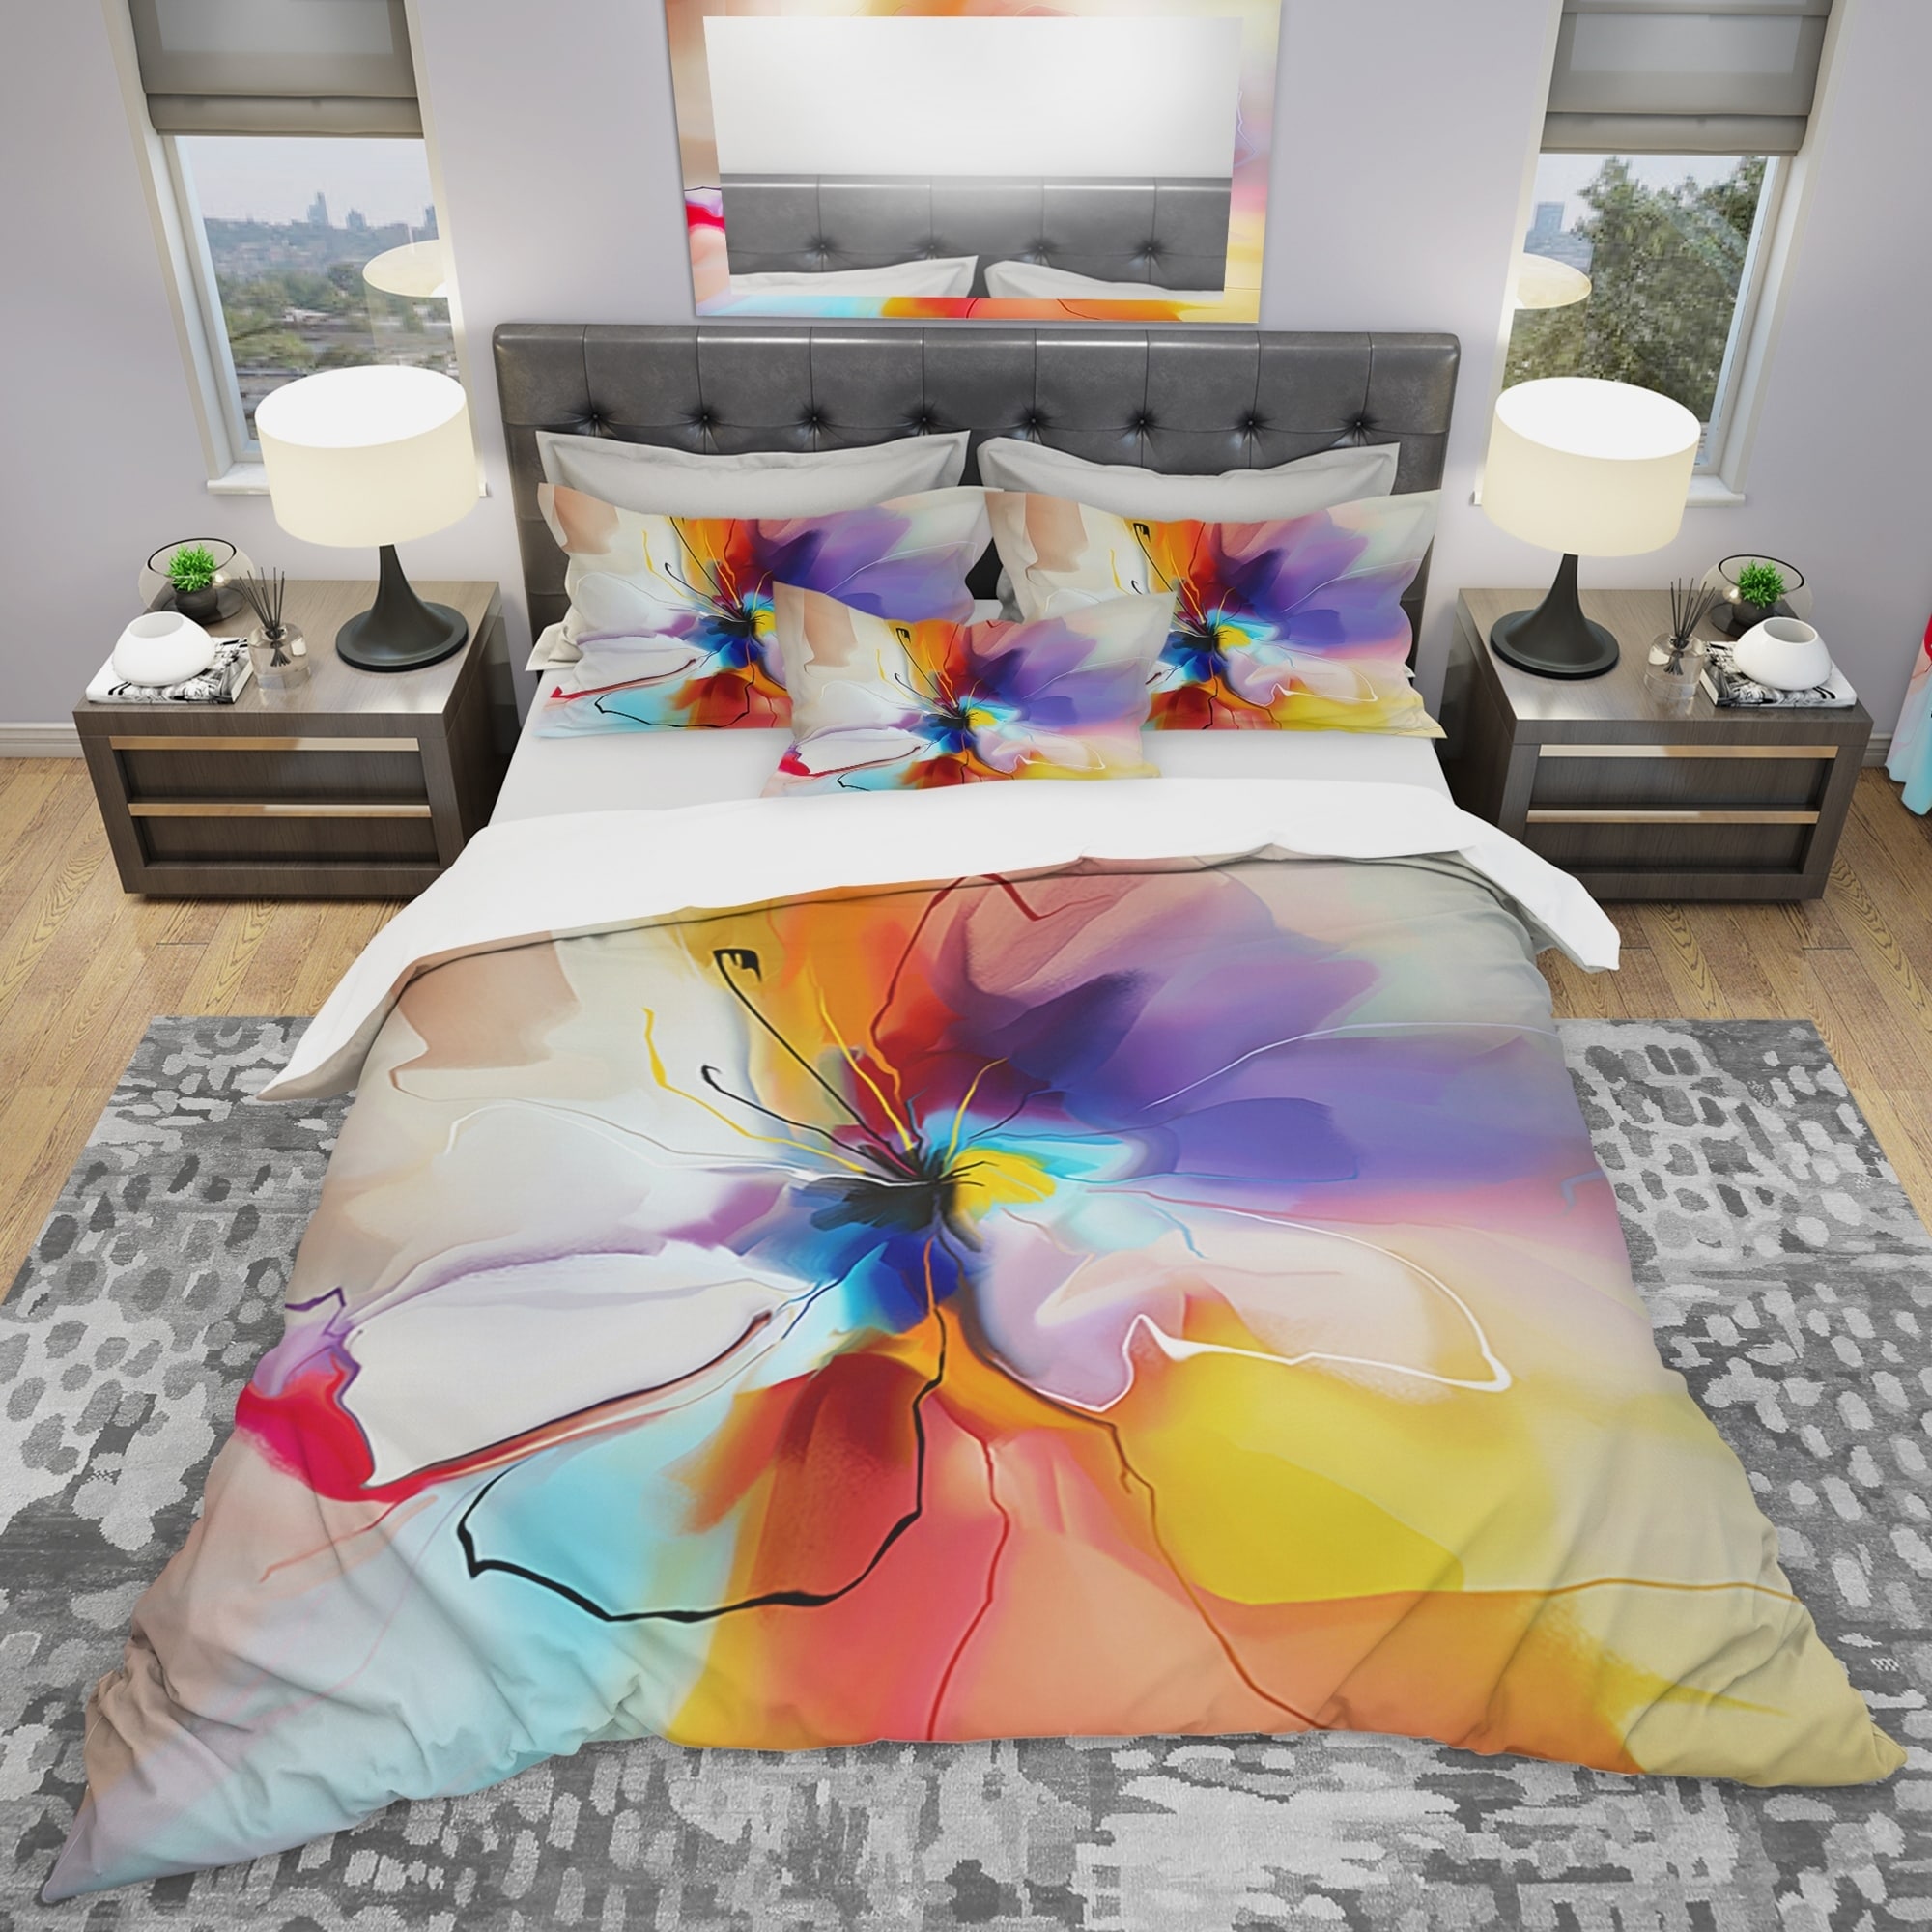 Queen Duvet Cover Abstract Art Duvet King Size Duvet Boho Bedding Luxury Bedding Colorful Bed Cover Artistic Bedding Designer Bedding